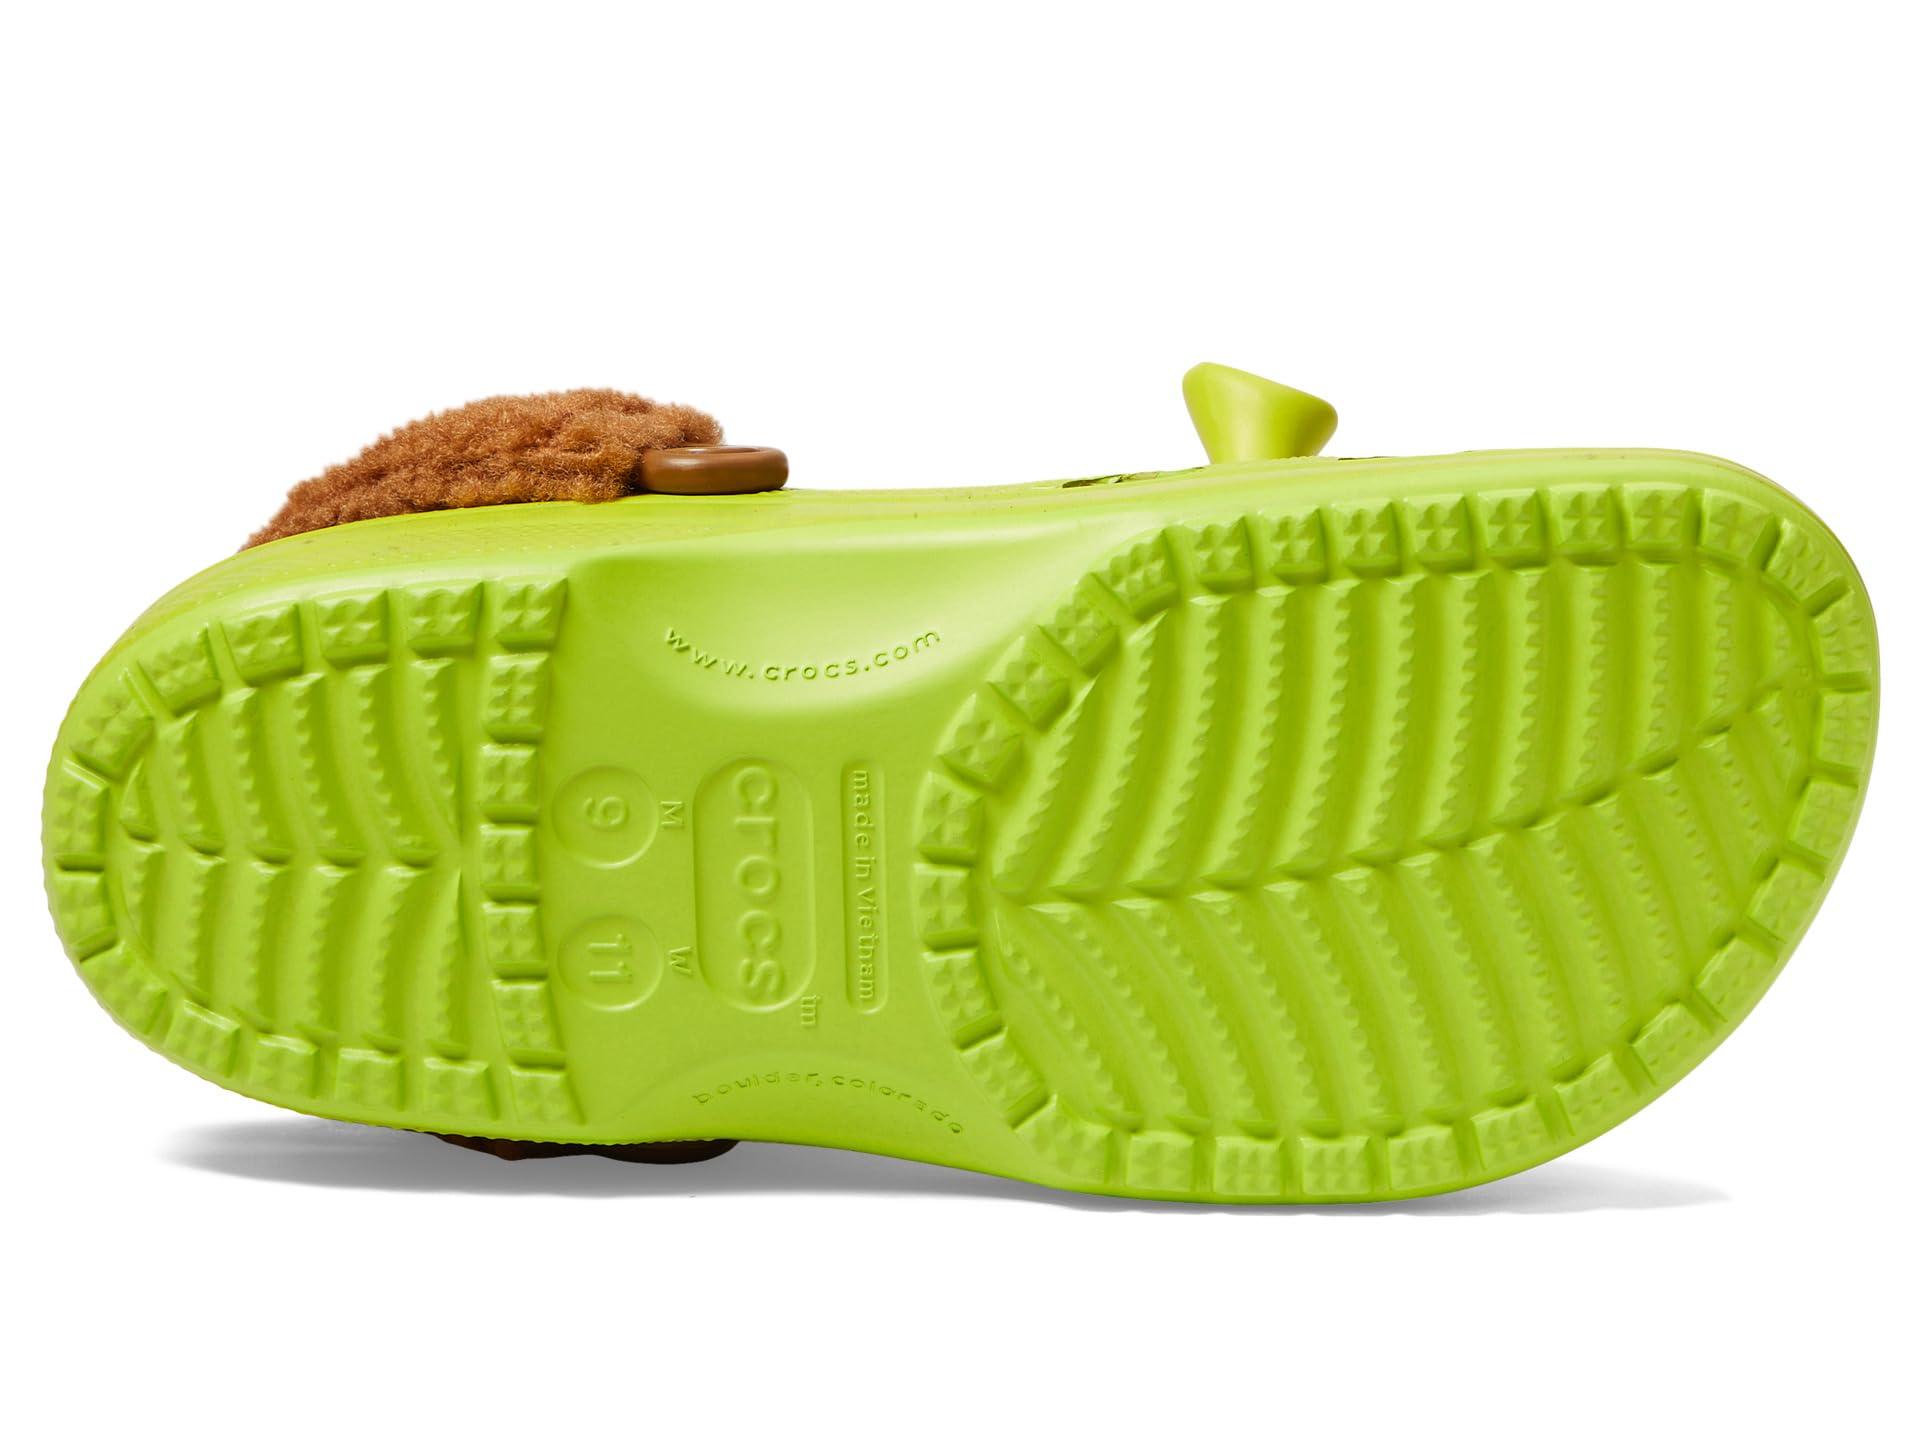  Crocs Unisex-Child Classic Shrek Clogs | Clogs & Mules